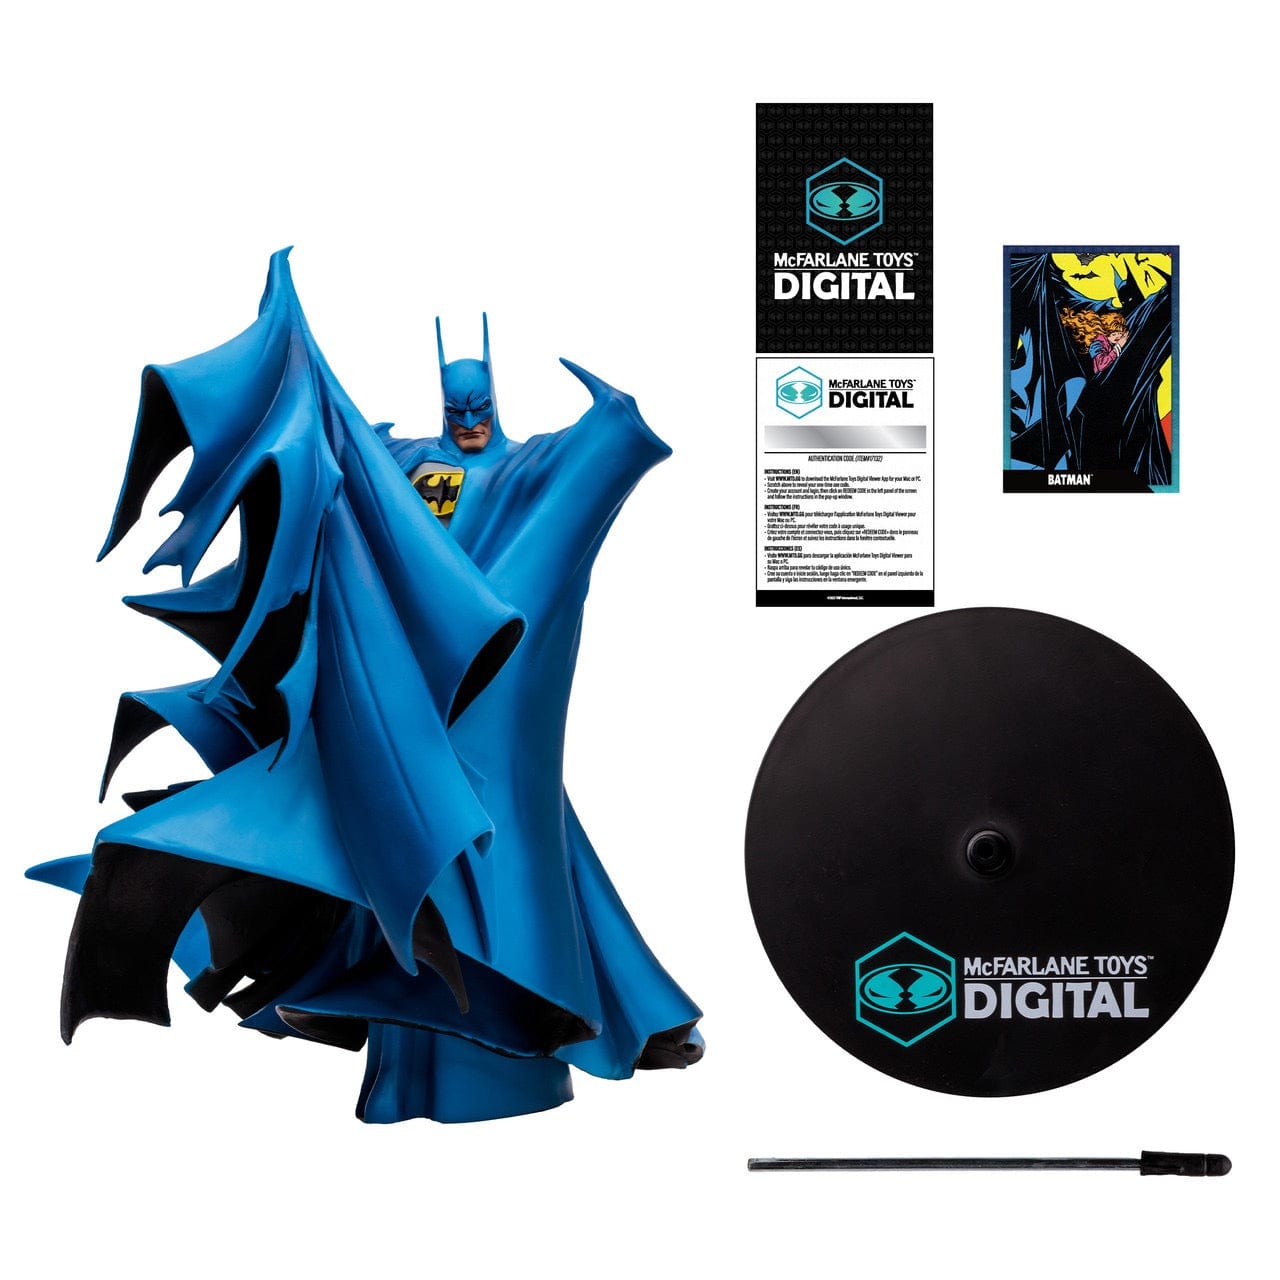 McFarlane Toys DC Direct Batman by Todd McFarlane 1:8 Scale Statue (Blue) w/Digital Collectible